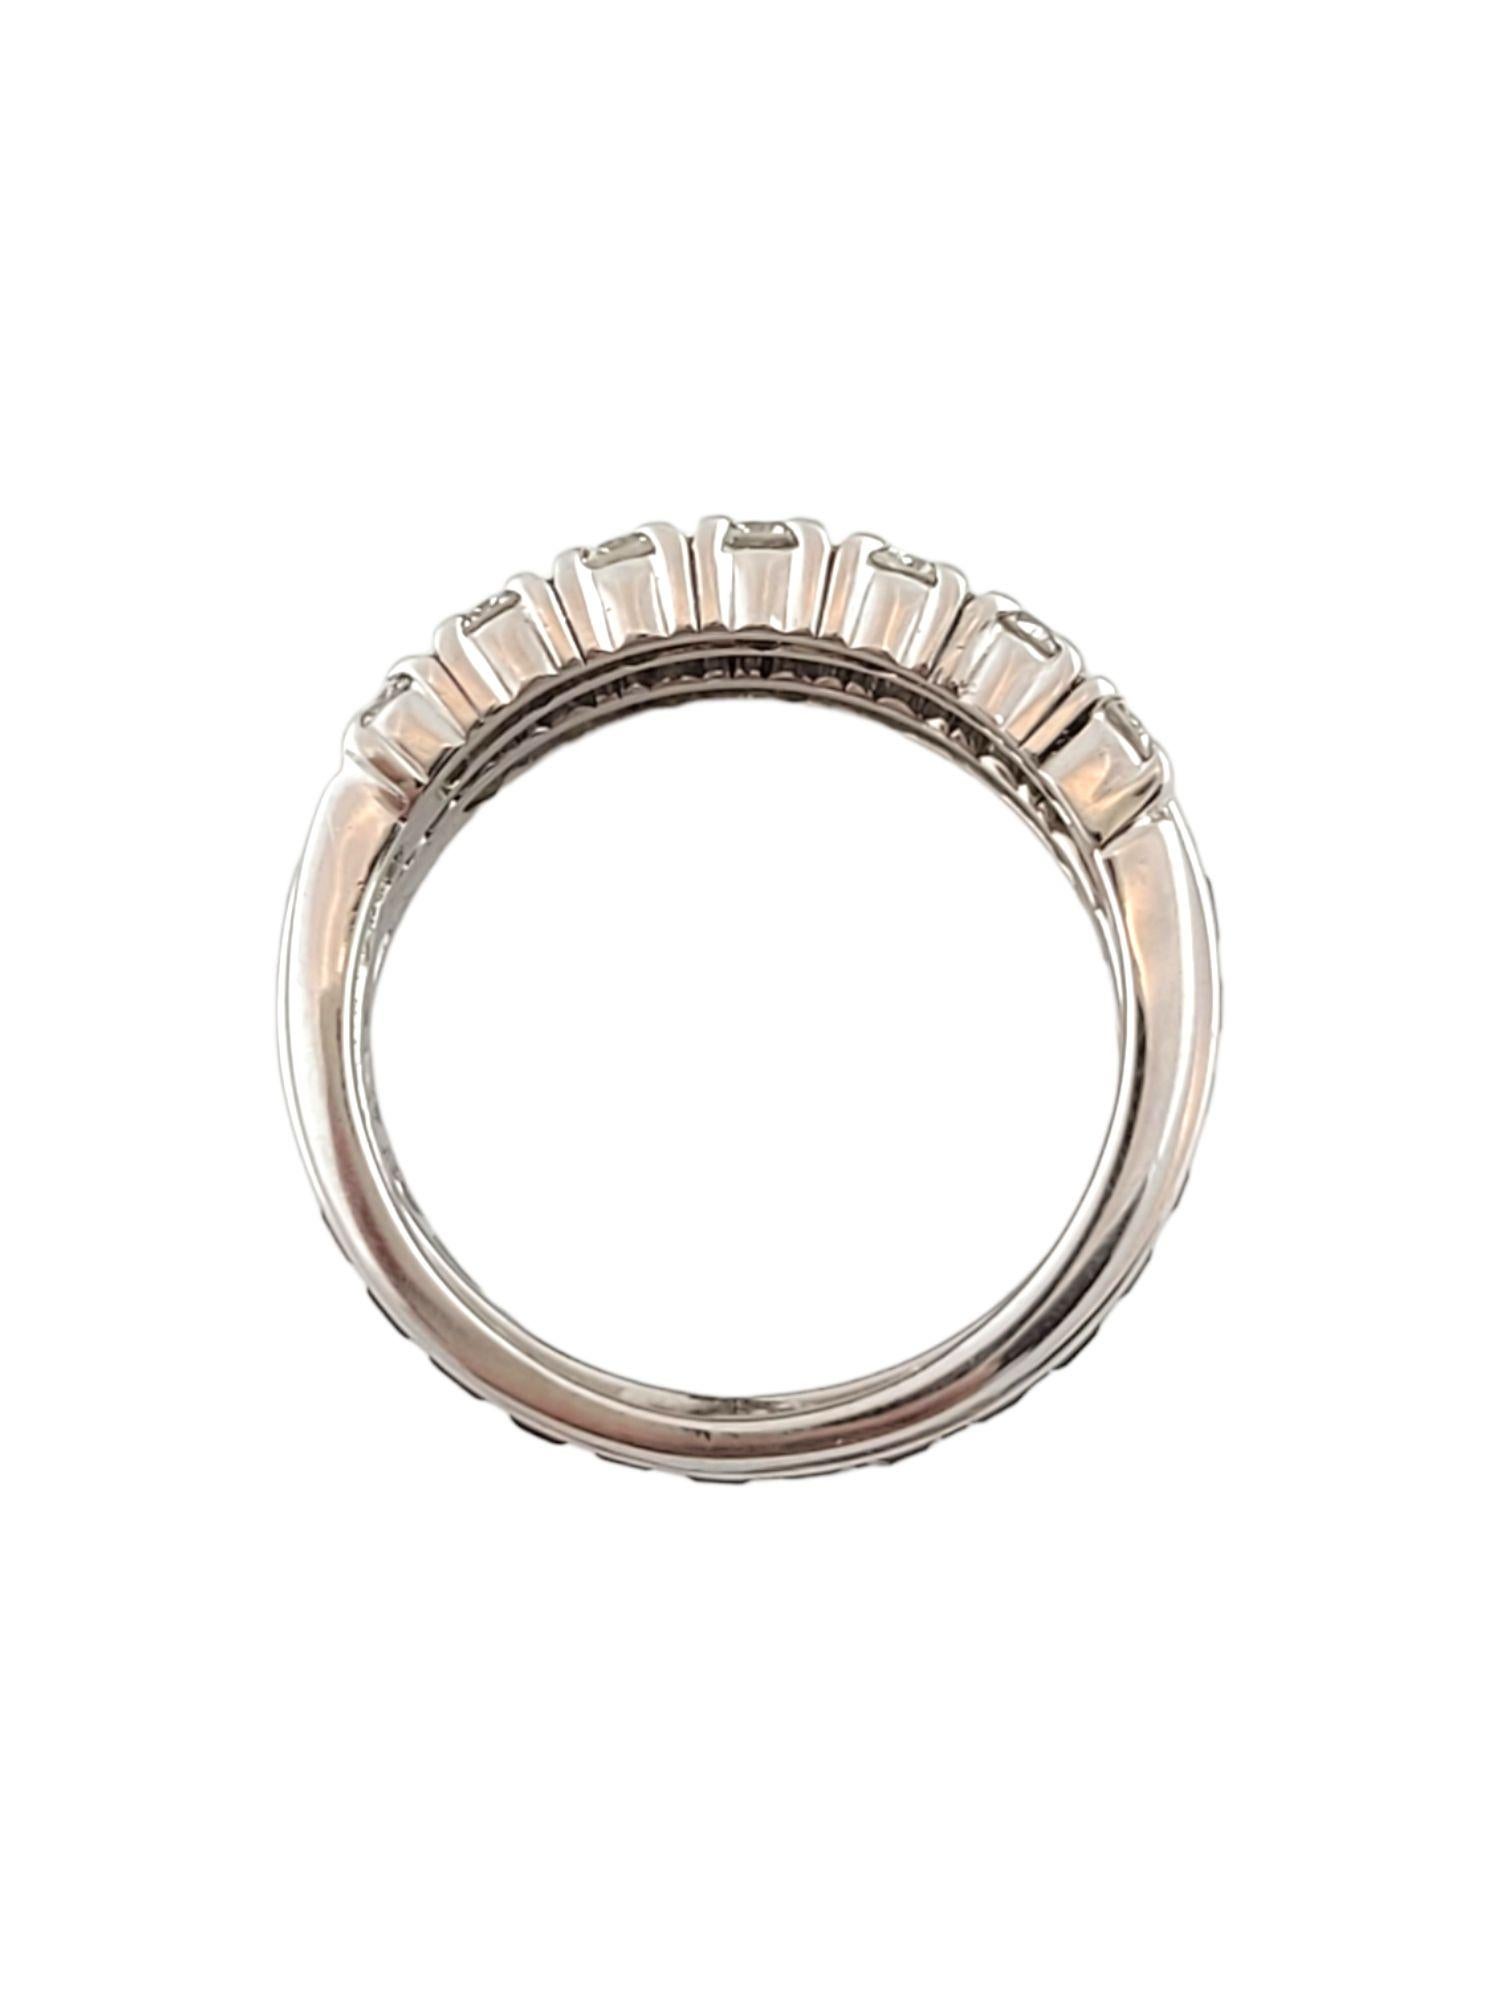 14K White Gold Diamond & Sapphire Ring Size 4.25 2